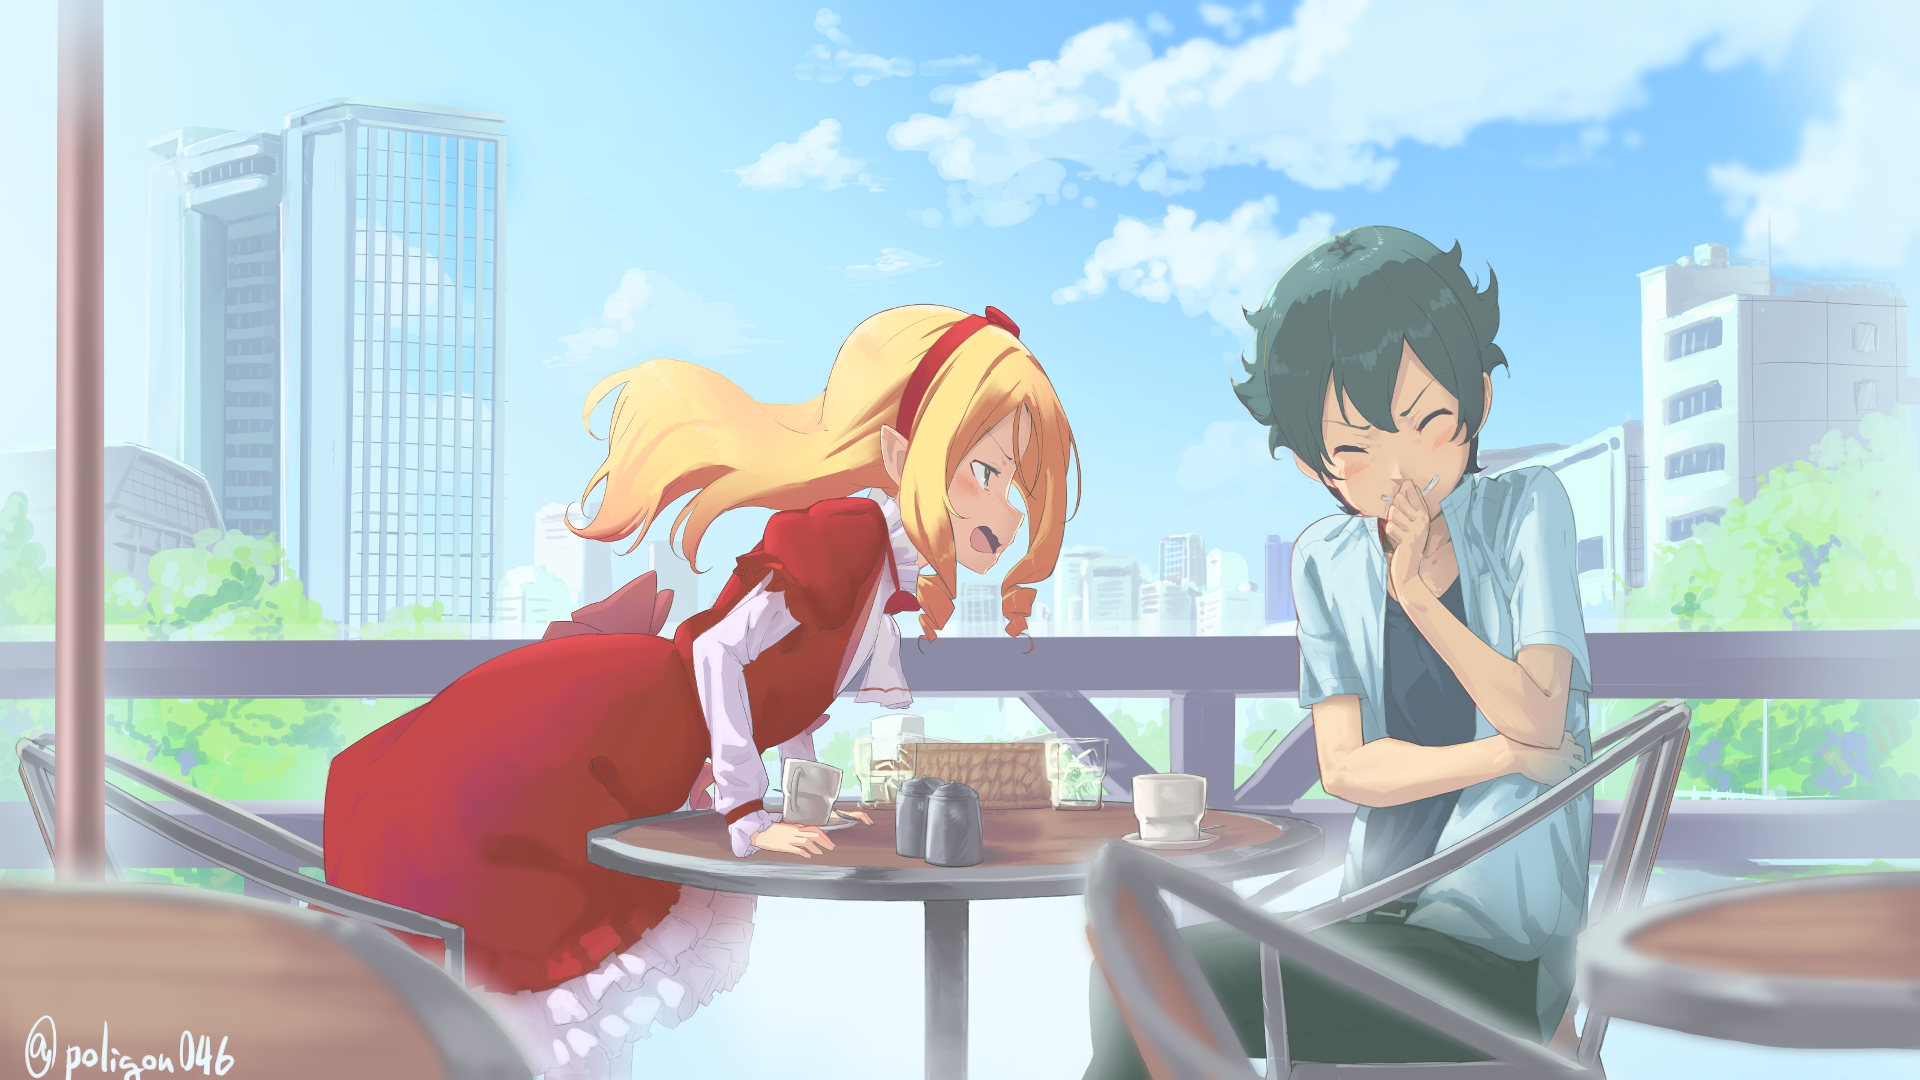 Anime EroManga-Sensei HD Wallpaper | Background Image